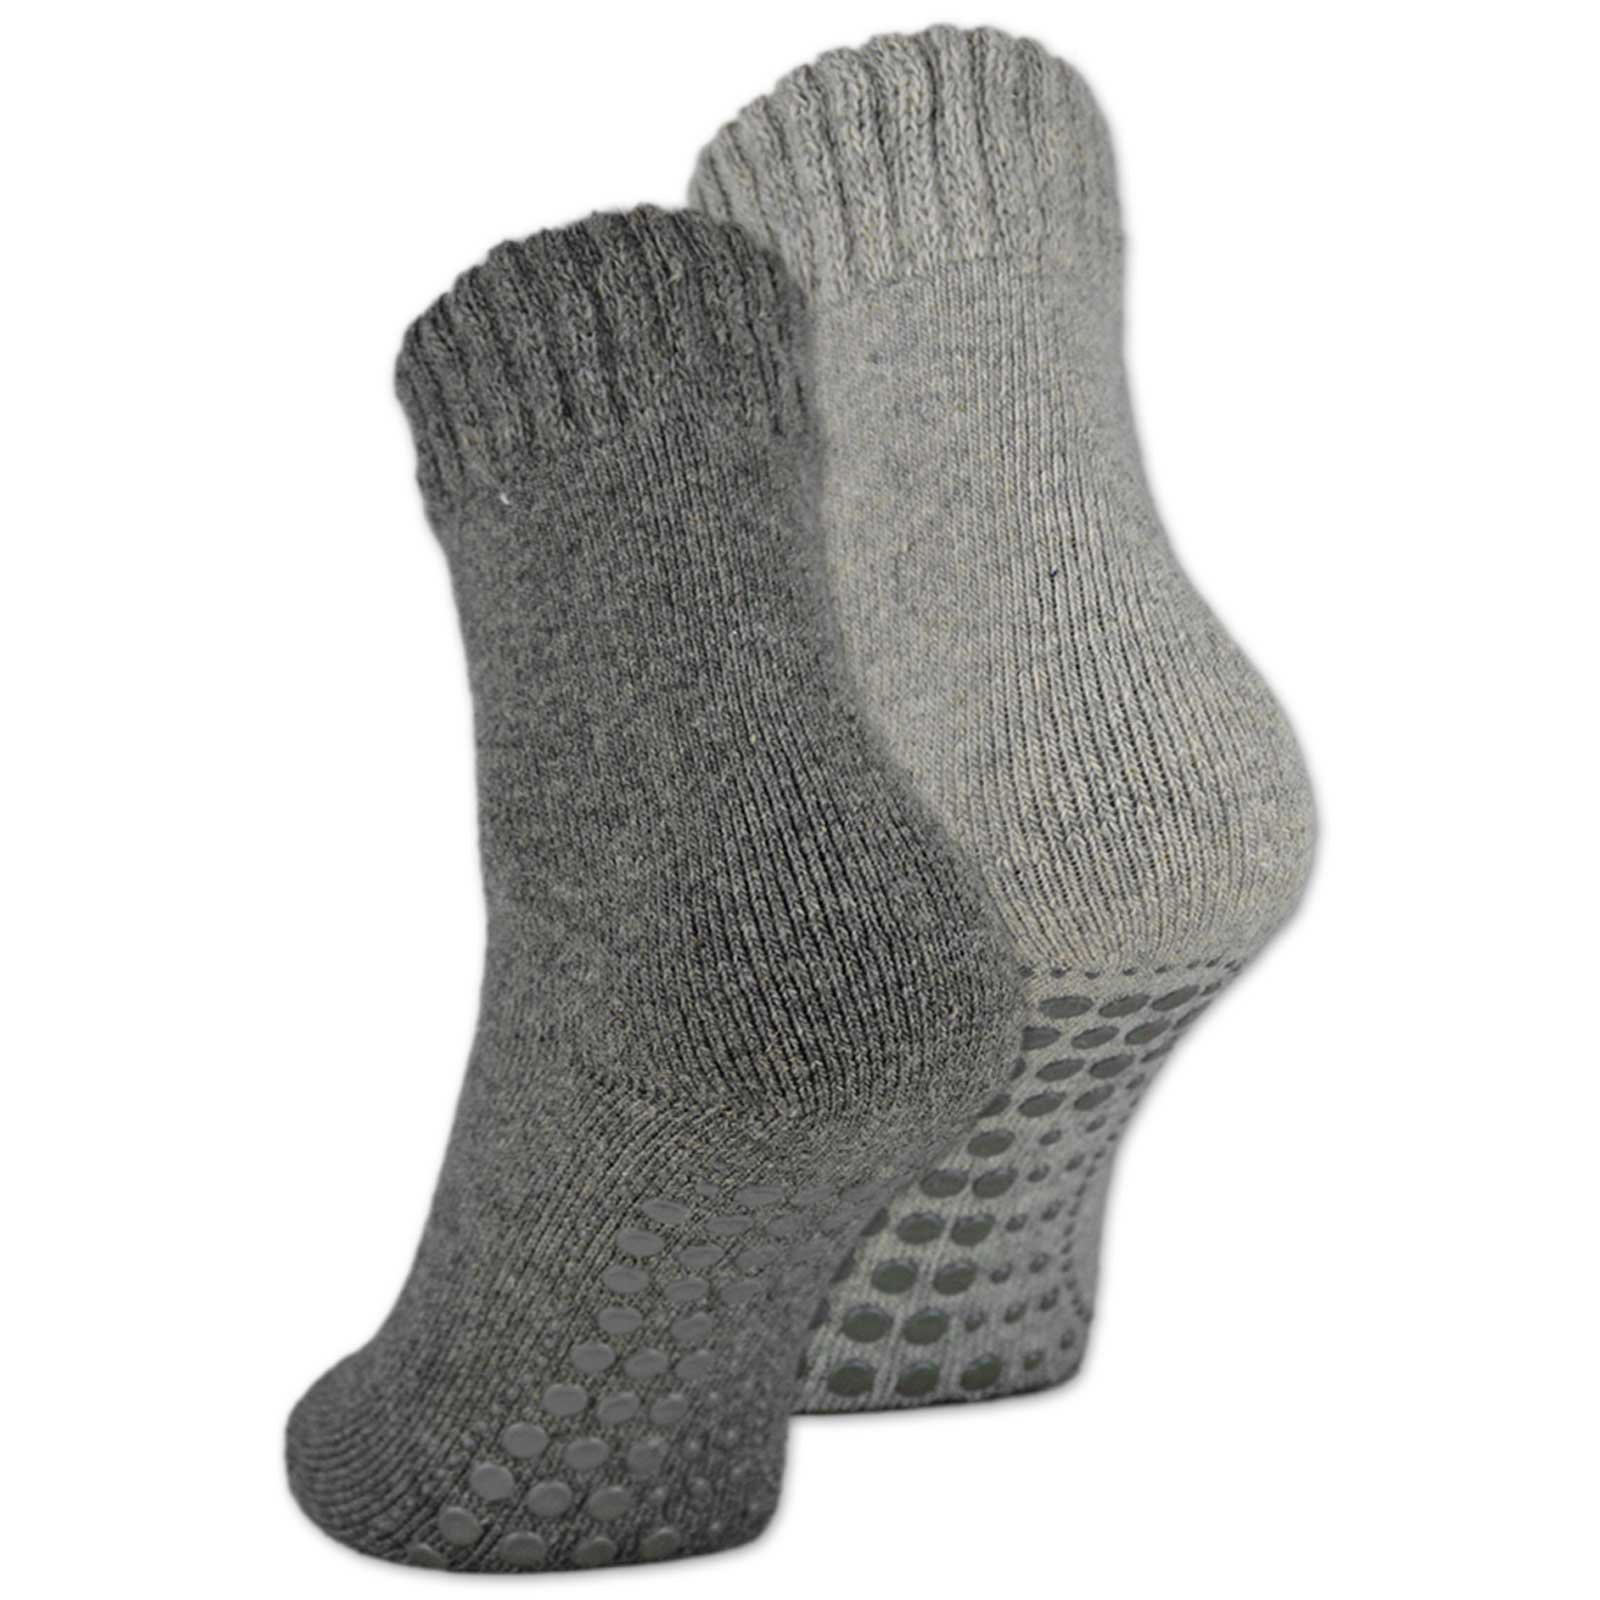 Männer beiläufige lange Baumwollsocken Sport Anti Slip Socken warme Herbst L1Z2 